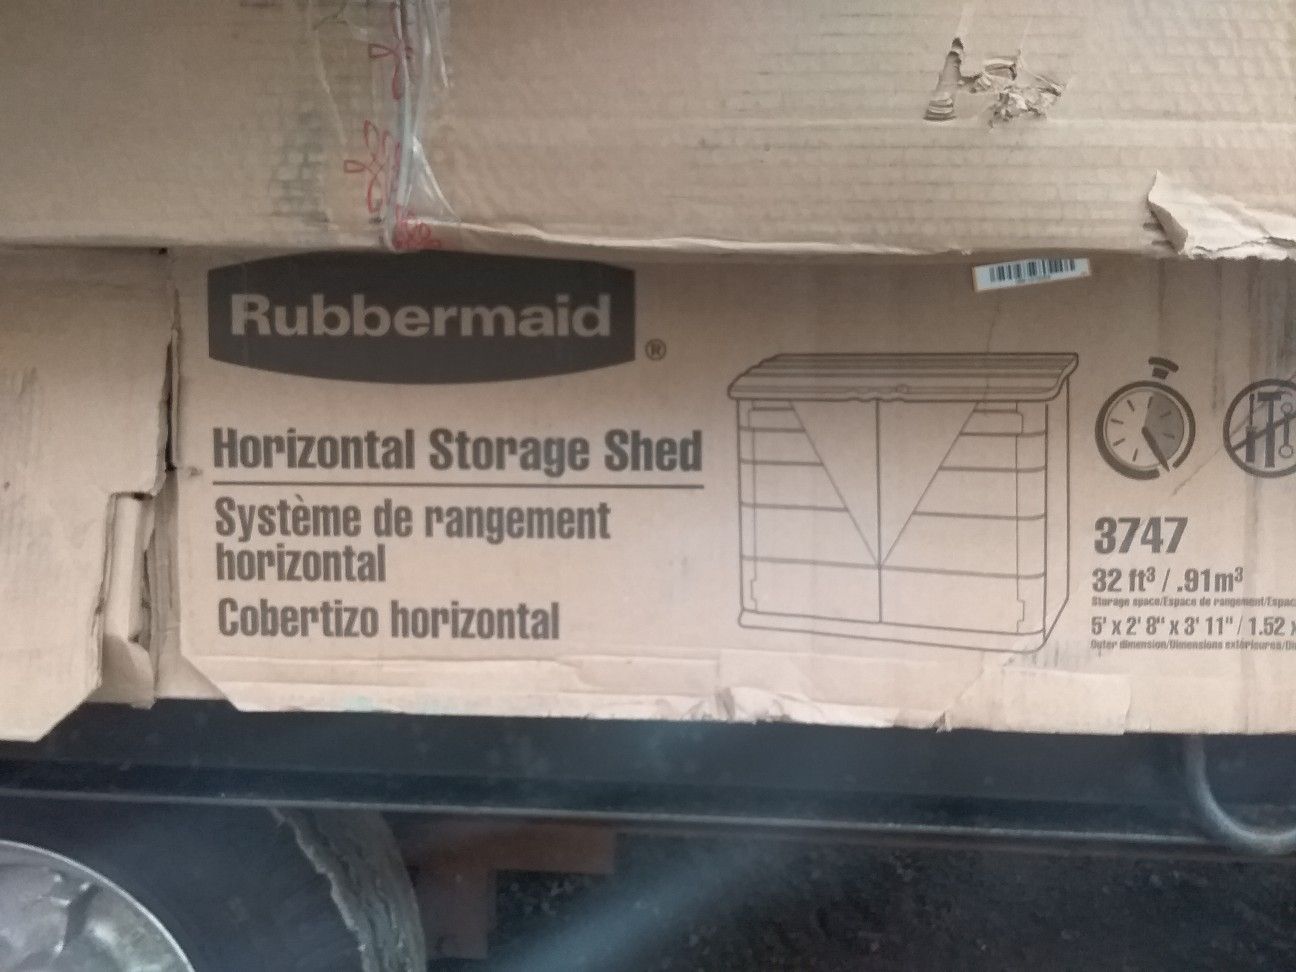 Rubbermaid horizontal storage shed